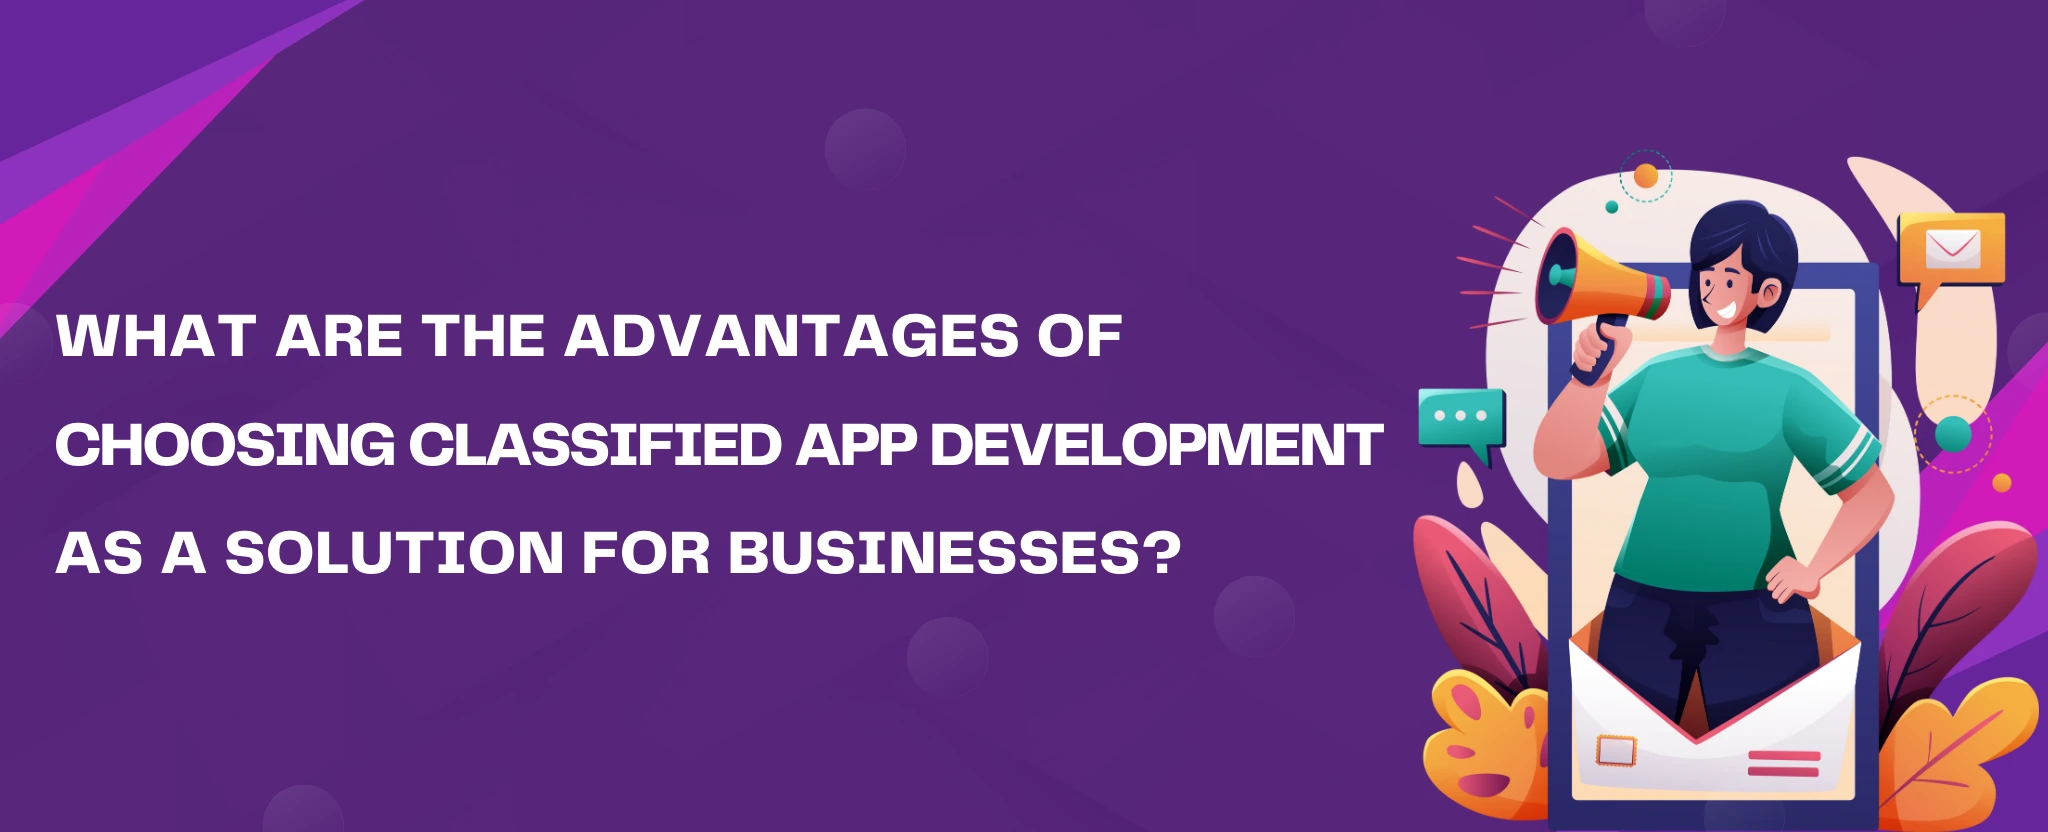 Advantages-of-Classified-App-Development